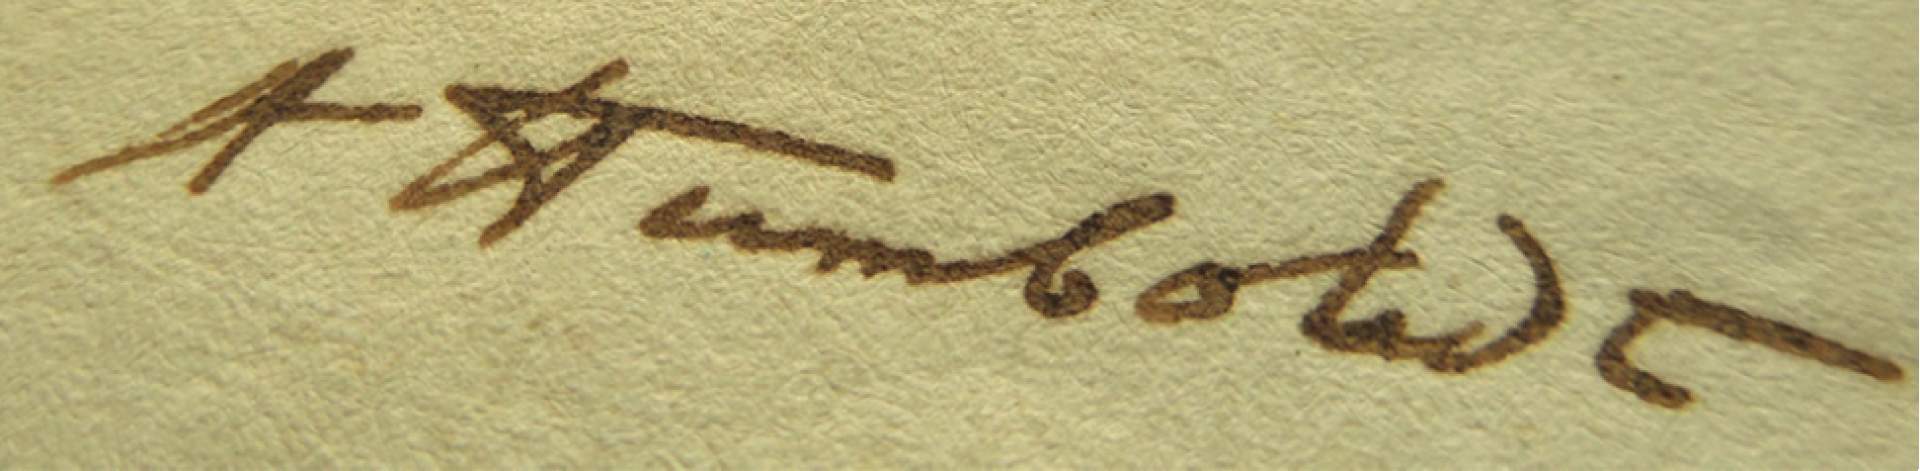 Humboldt’s Signature